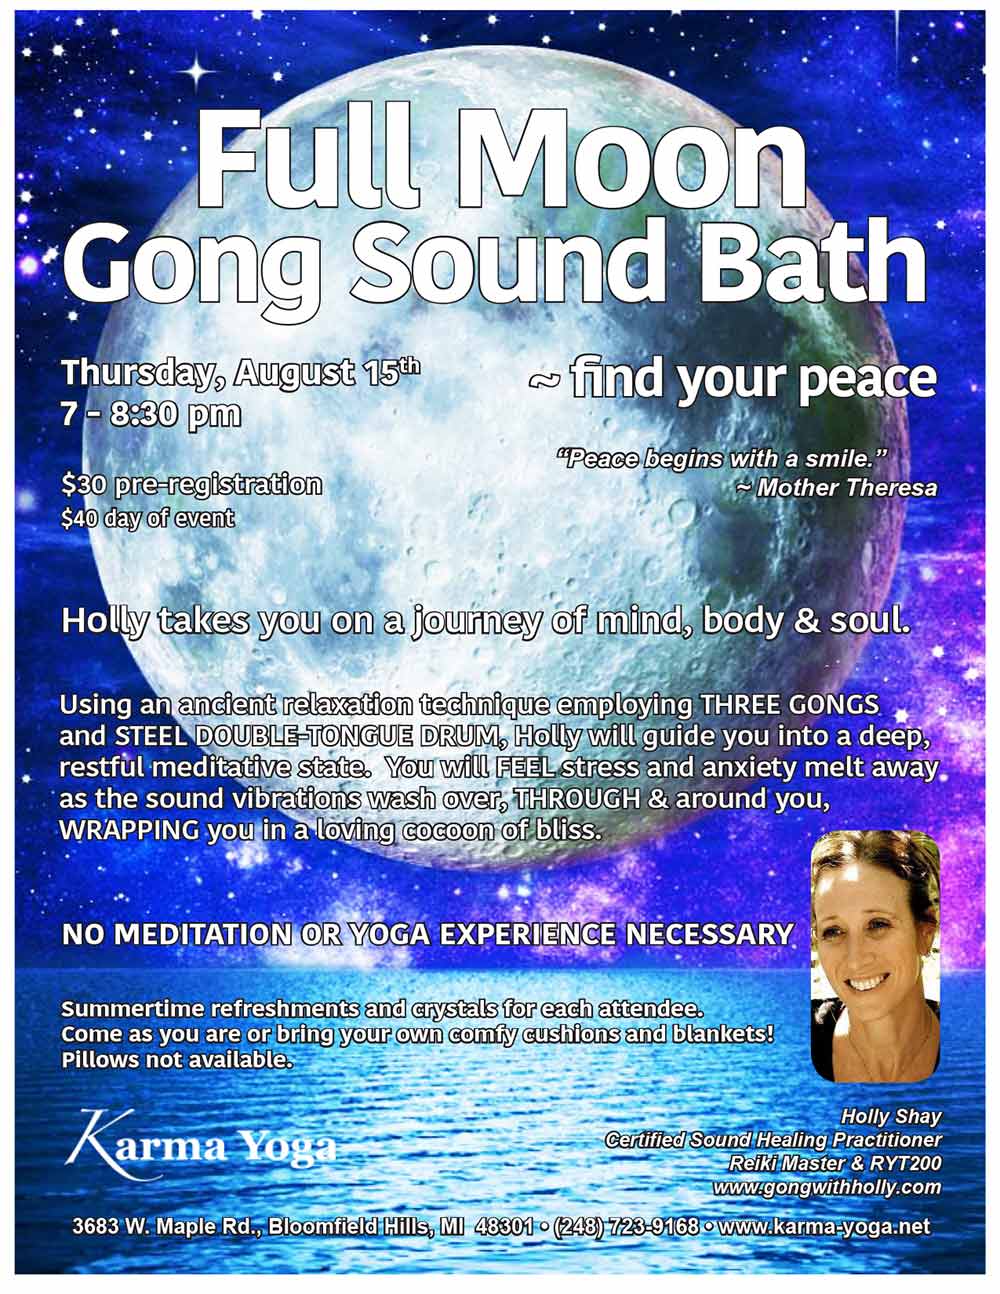 Full Moon Gong Sound Bath, August 15th, Karma Yoga, Bloomfield Hills, MI